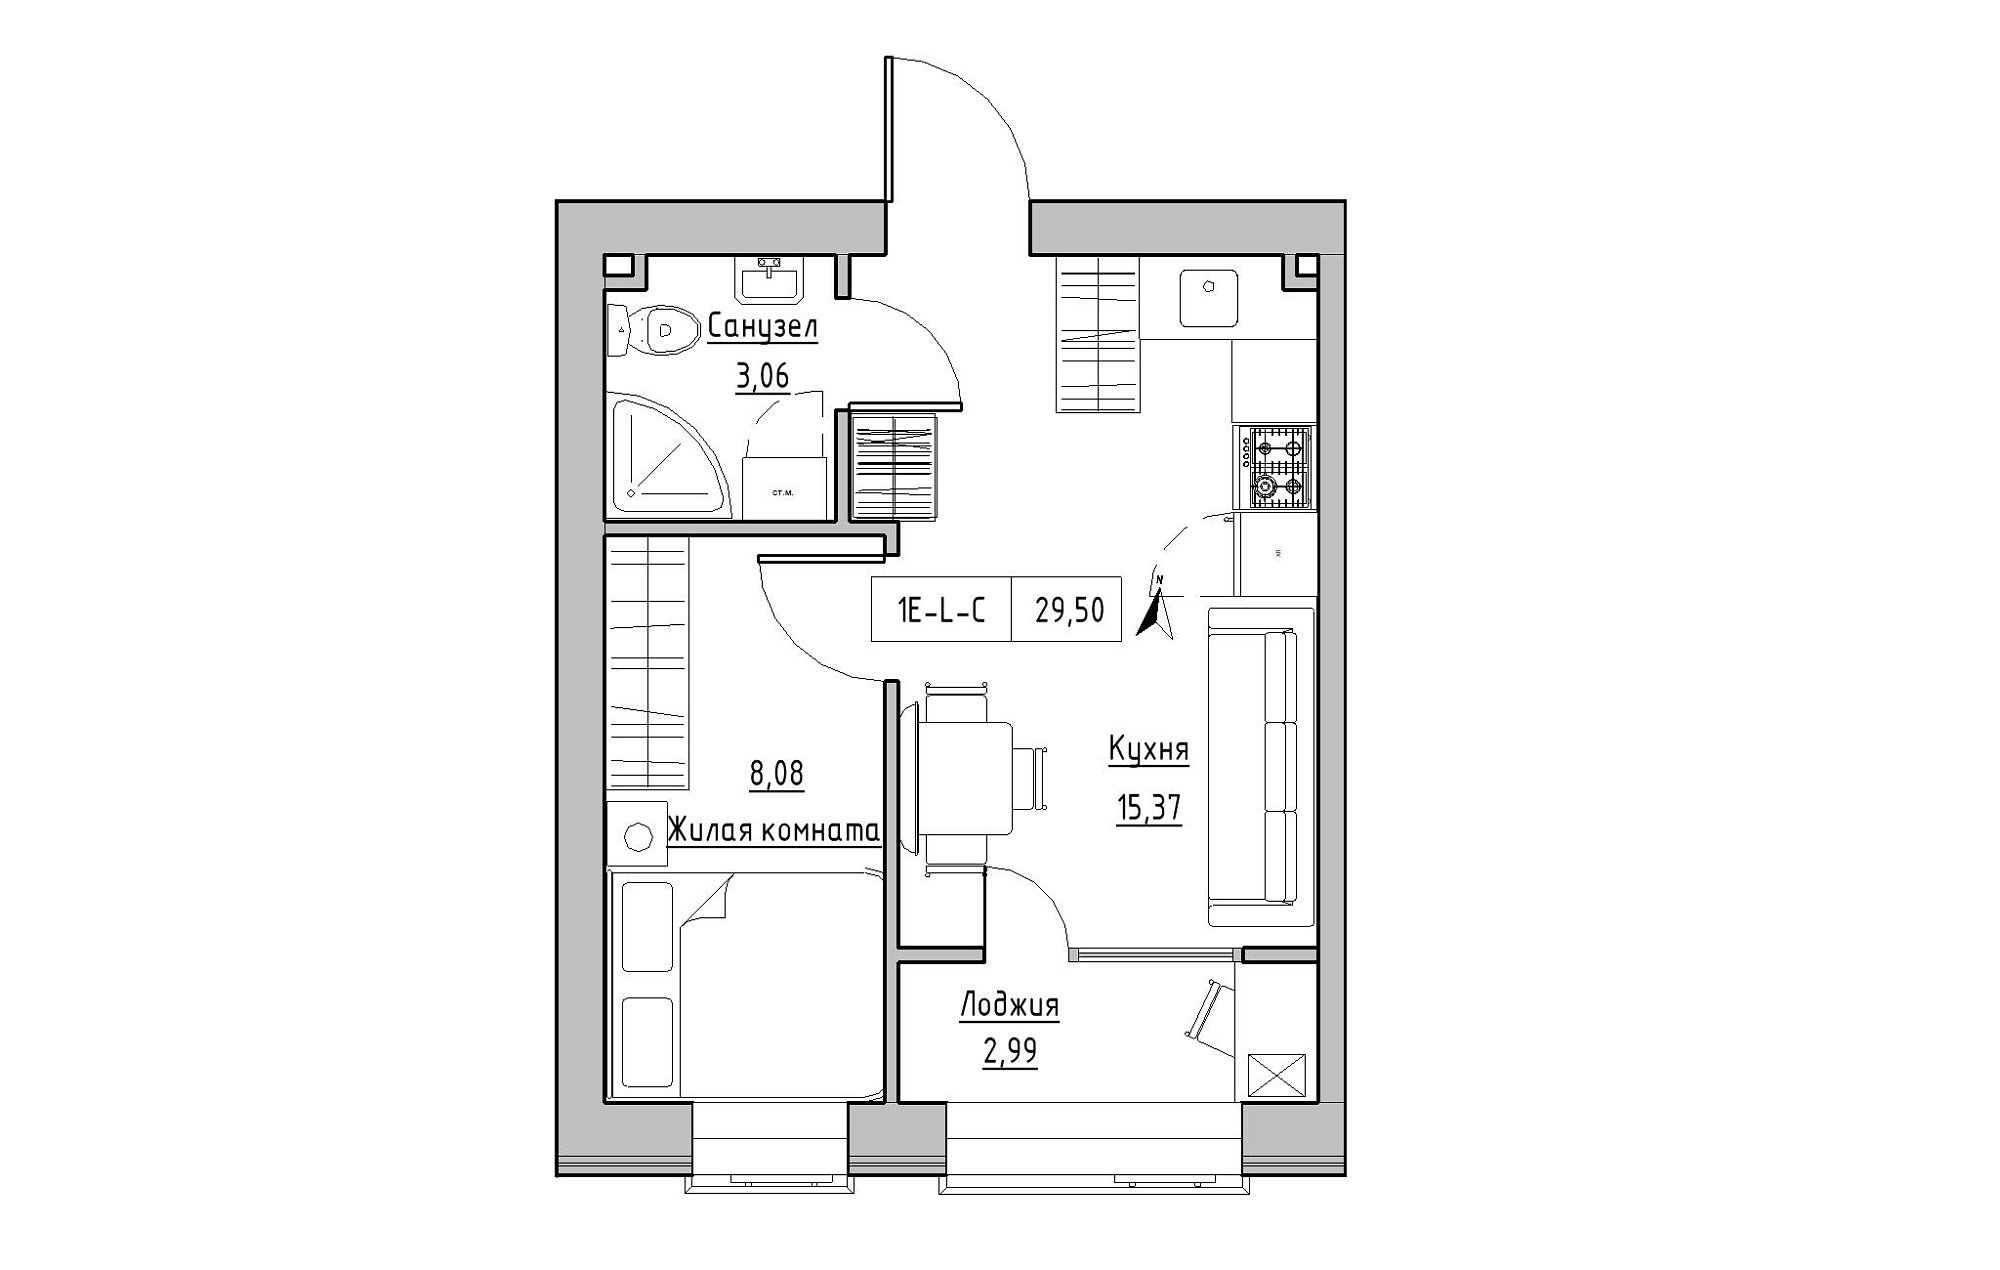 Planning 1-rm flats area 29.5m2, KS-019-01/0010.